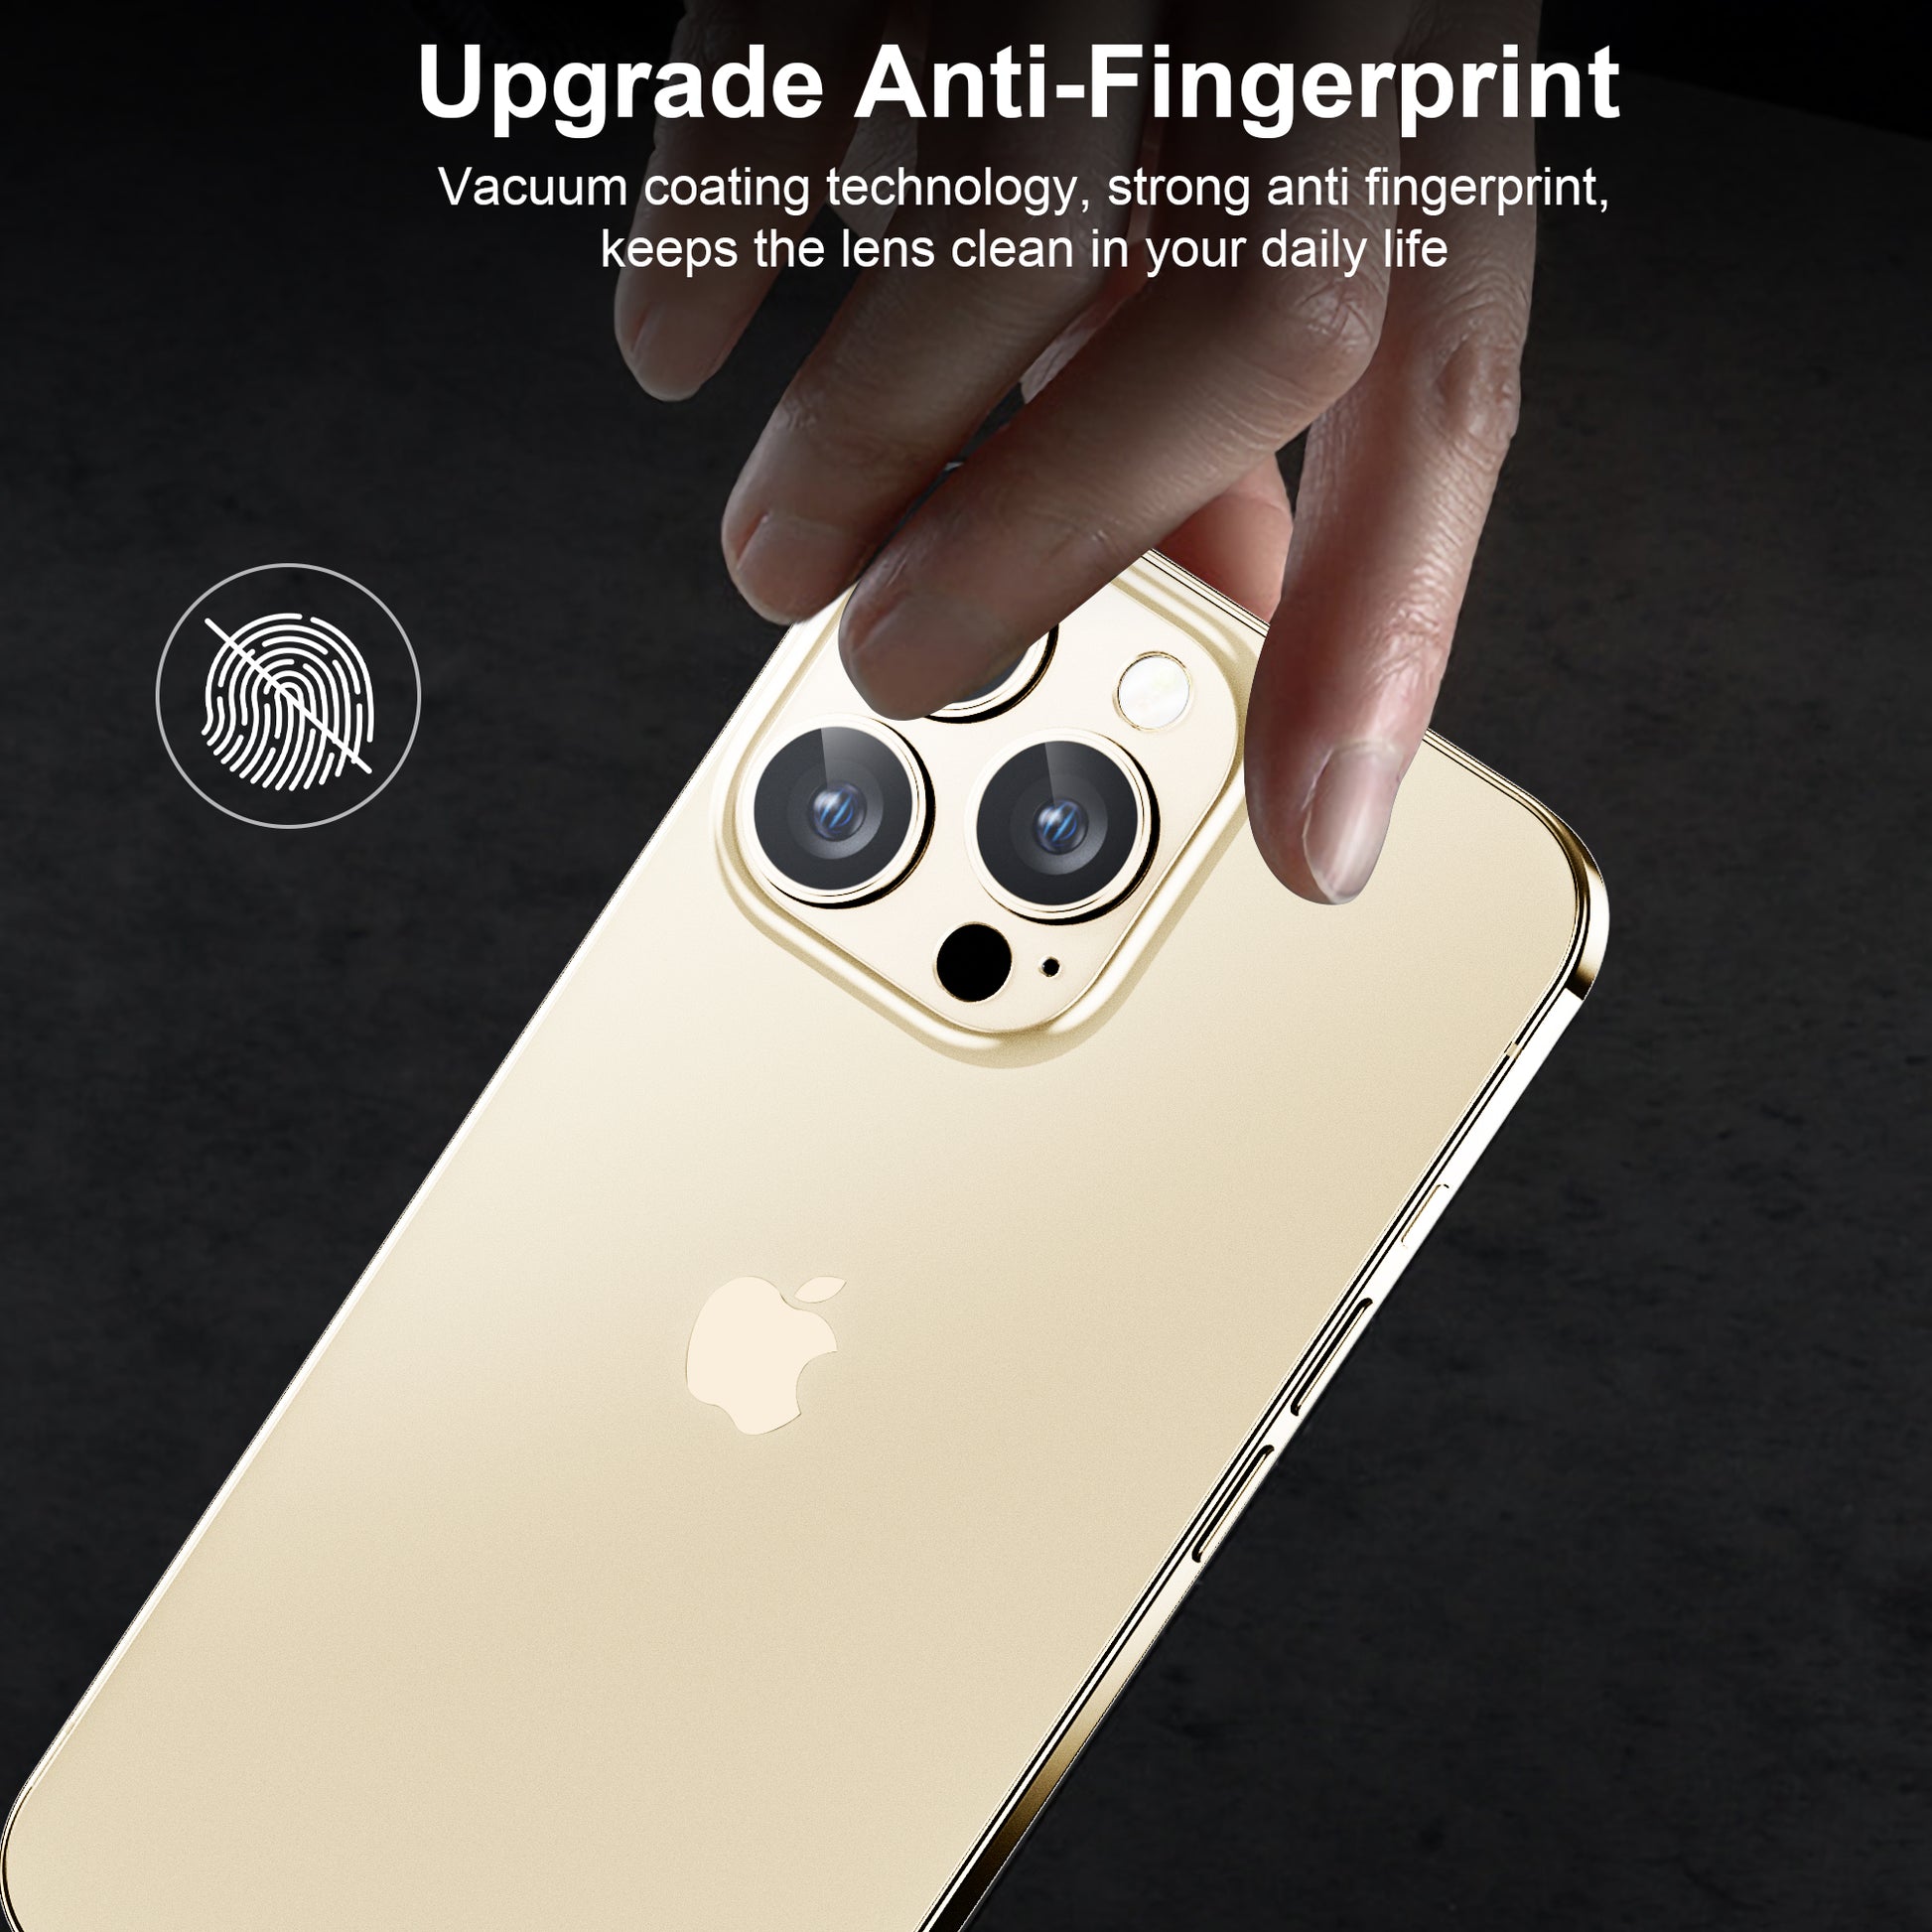 Vidrio Protector Lente De Camara Para iPhone 14 Pro / 14 Pro Max Gold